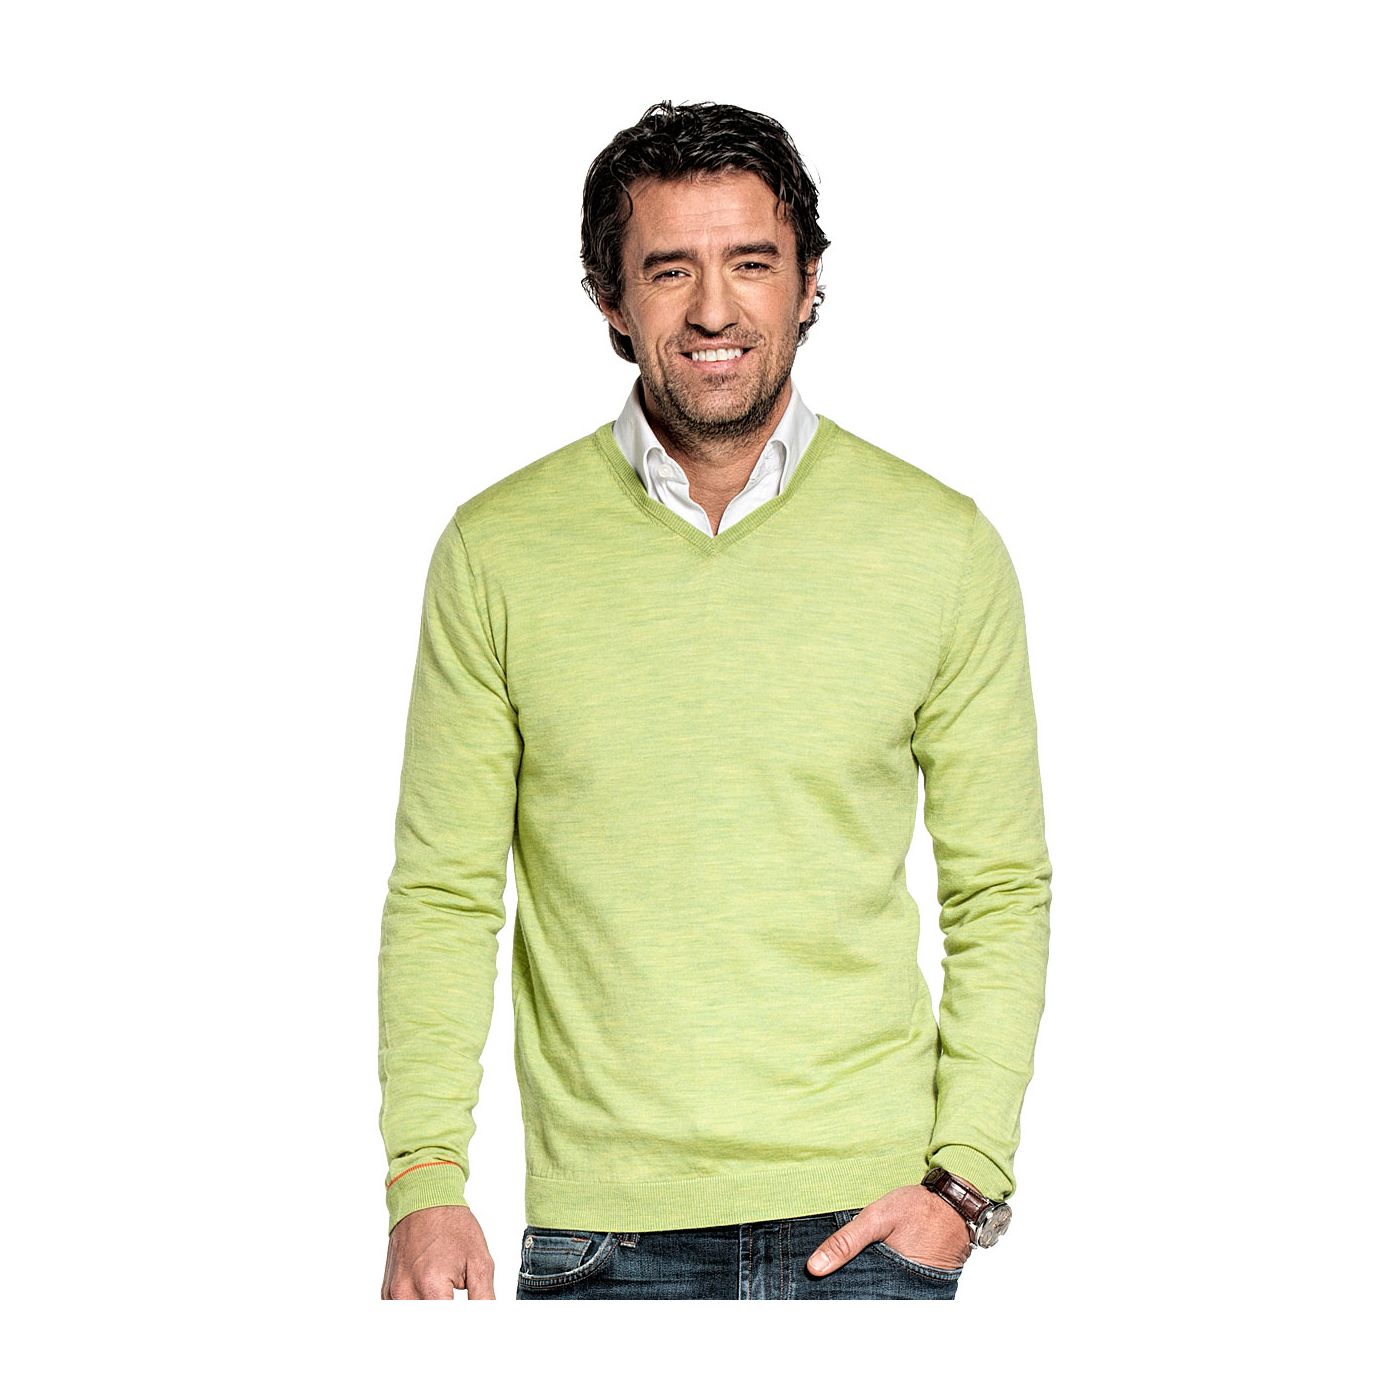 V-Neck sweater for men made of Merino wool in Bright green